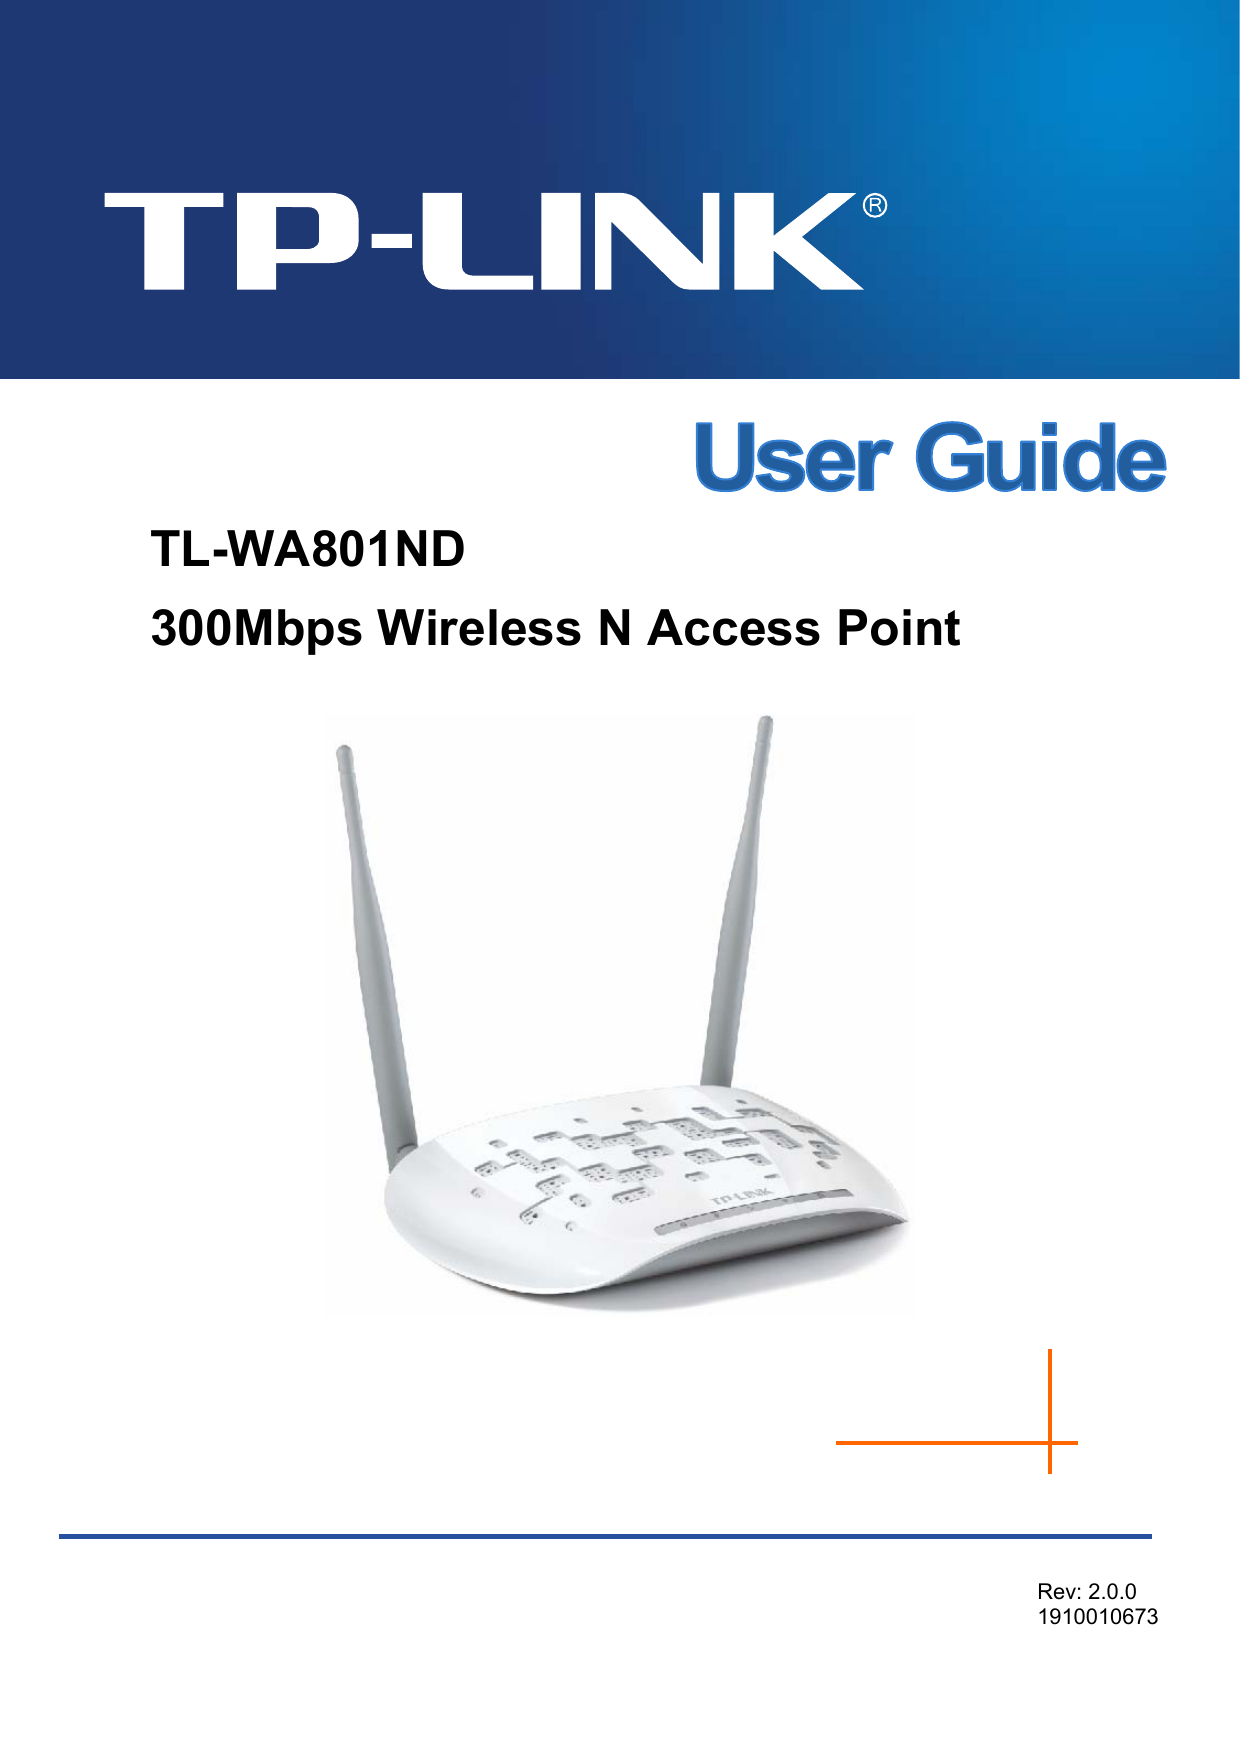   TL-WA801ND 300Mbps Wireless N Access Point    Rev: 2.0.0 1910010673 